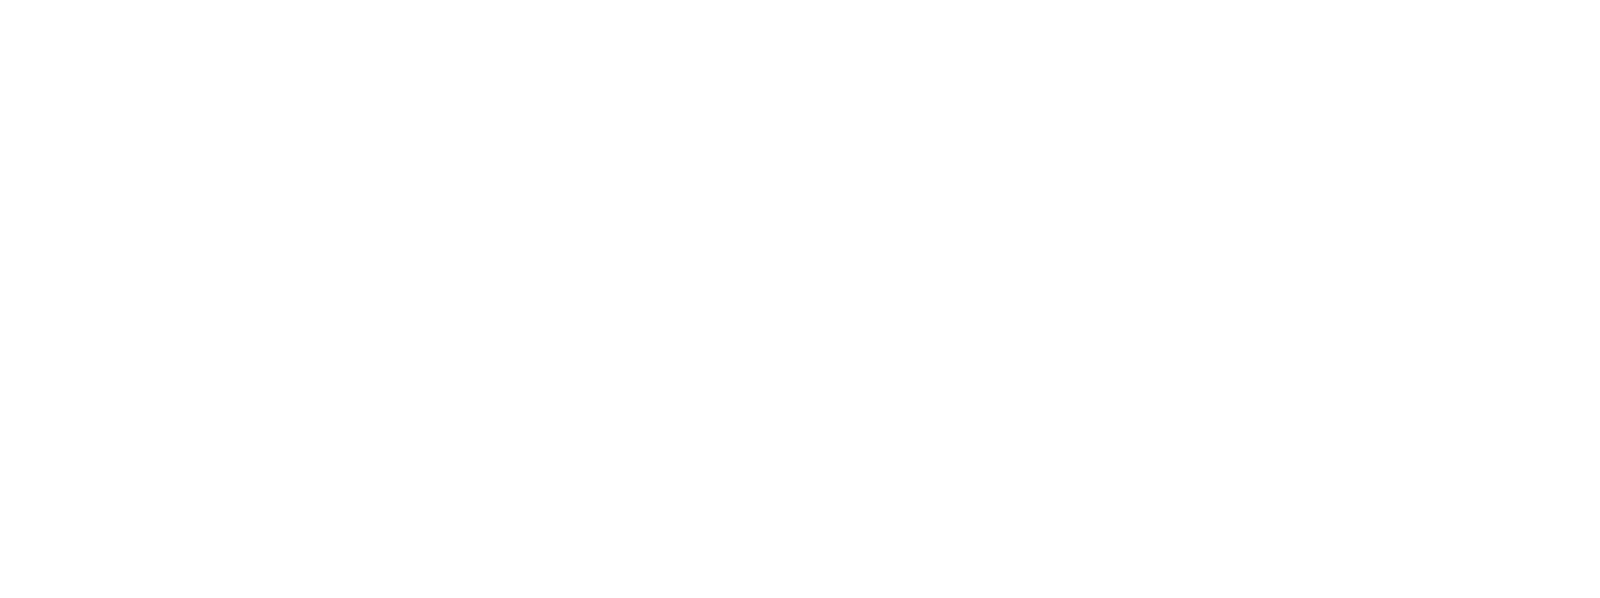 IEEE UFABC